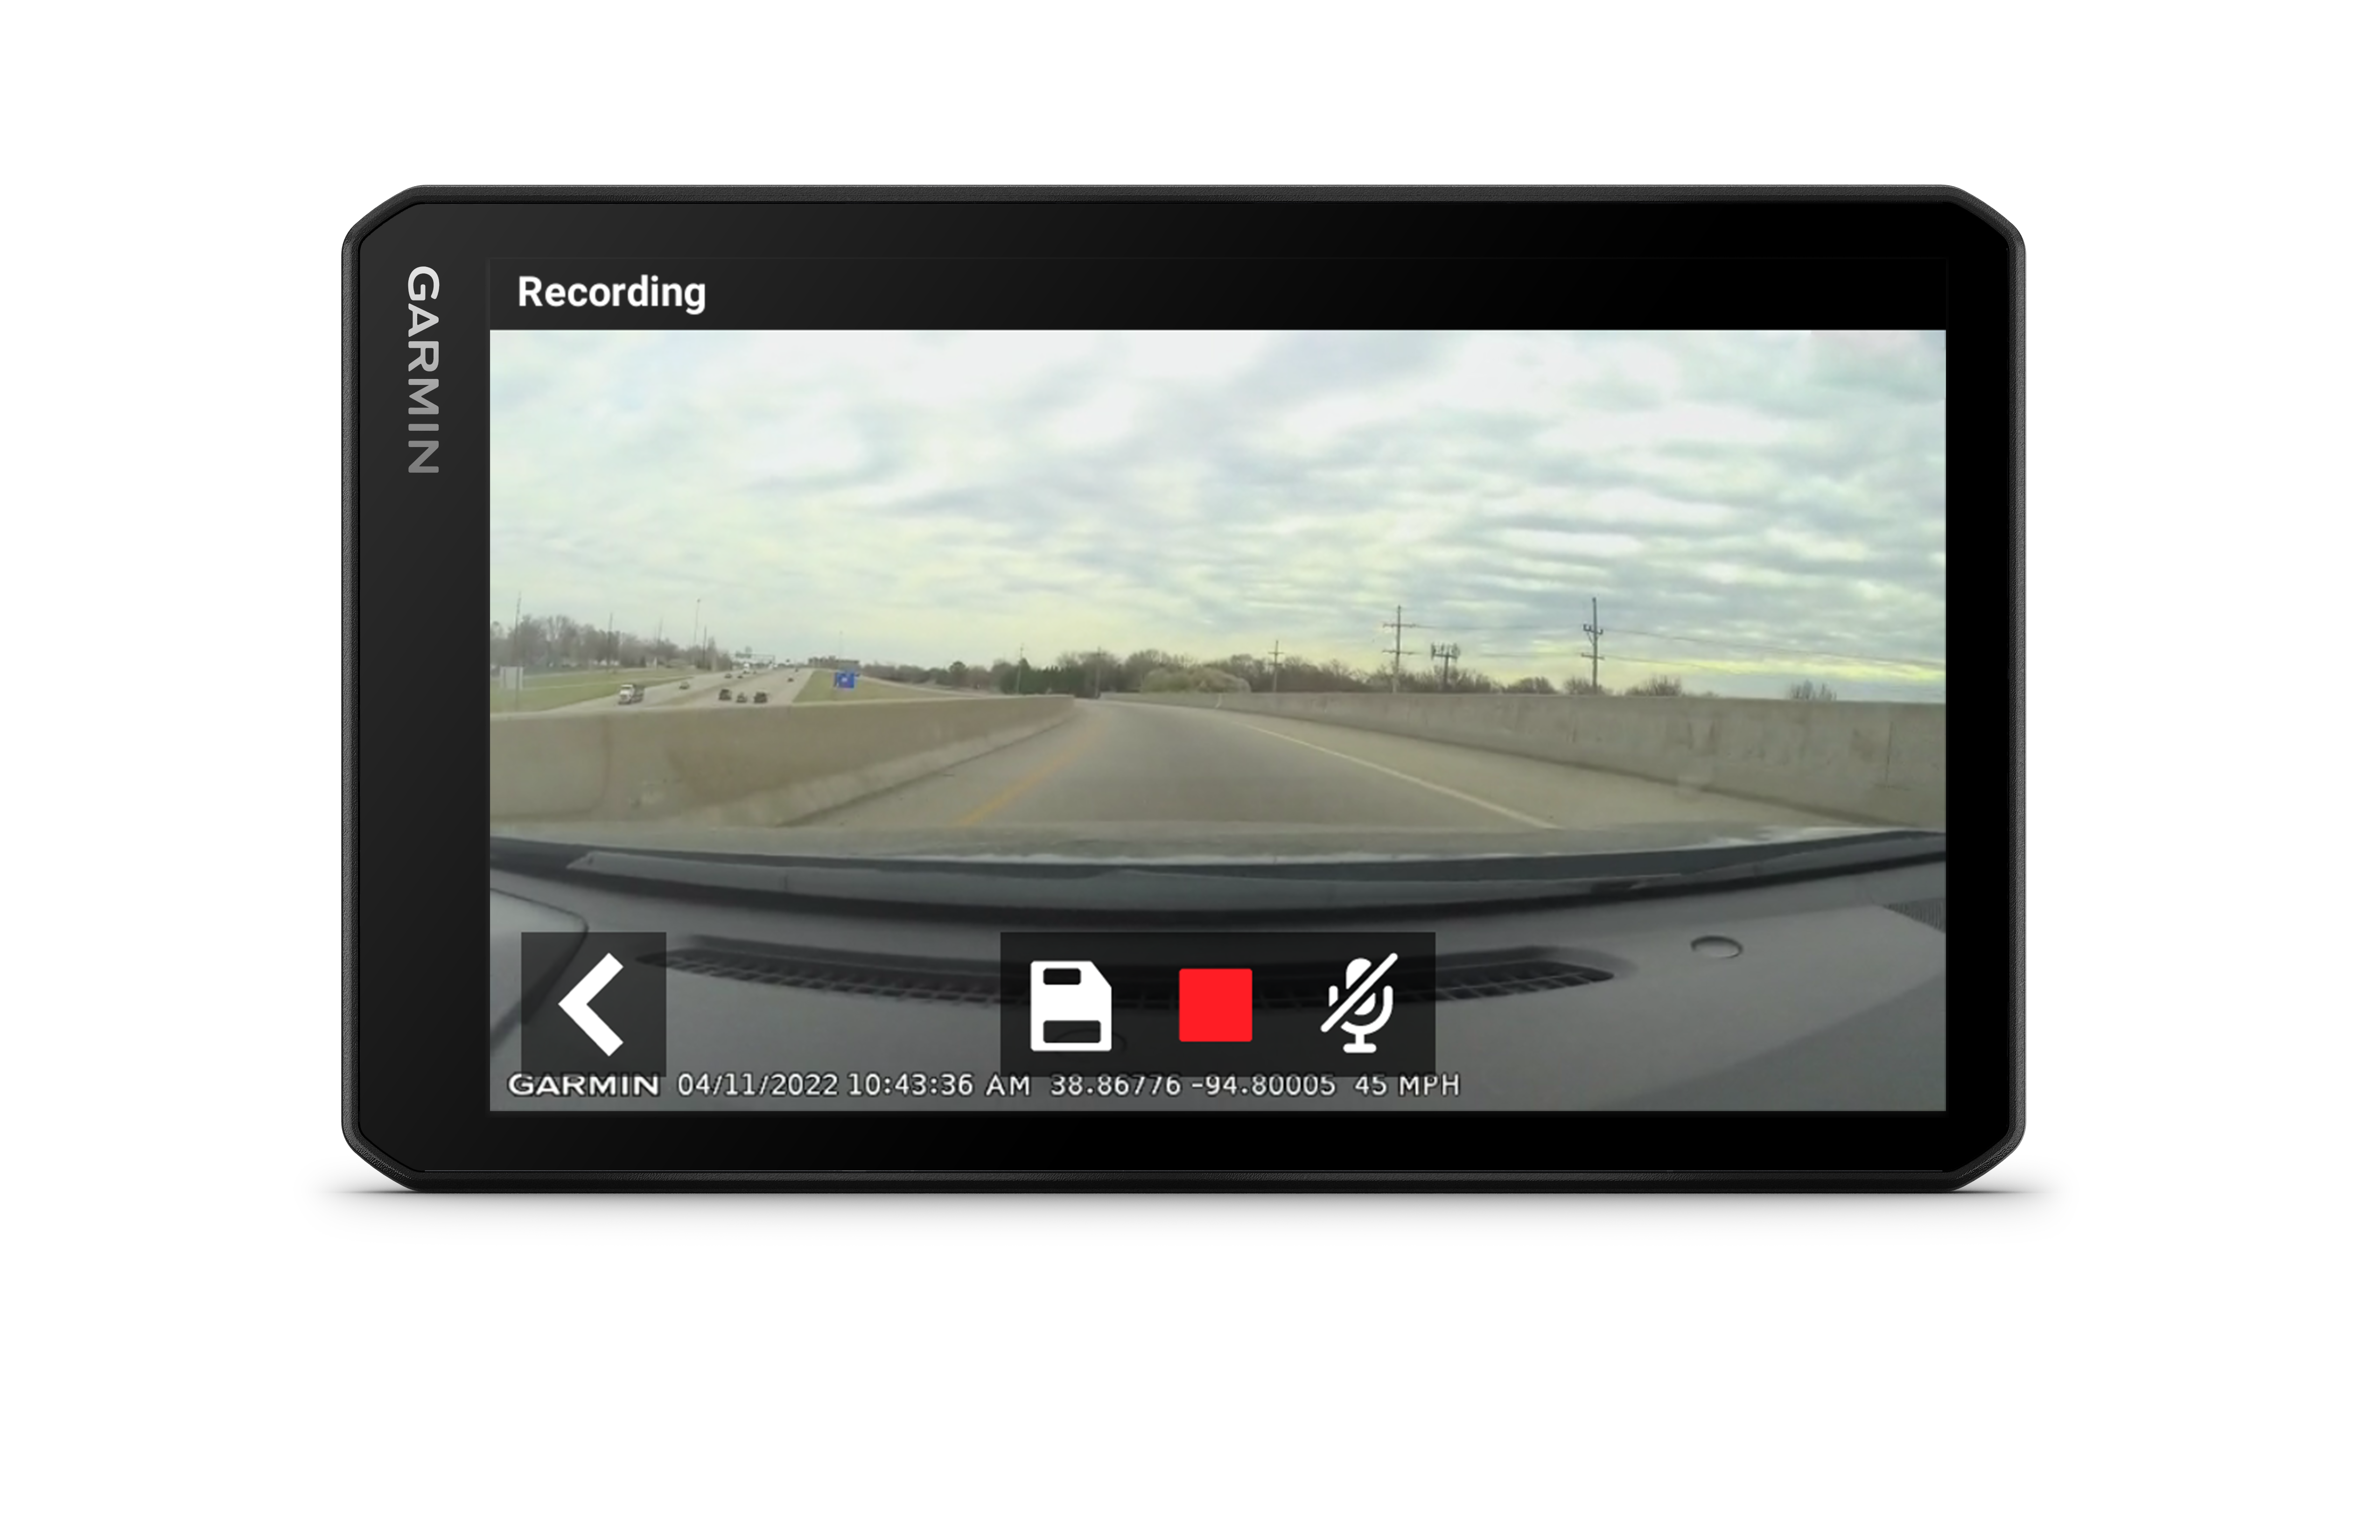 Garmin announces 4 new dash cams with cloud-connected storage - CNET